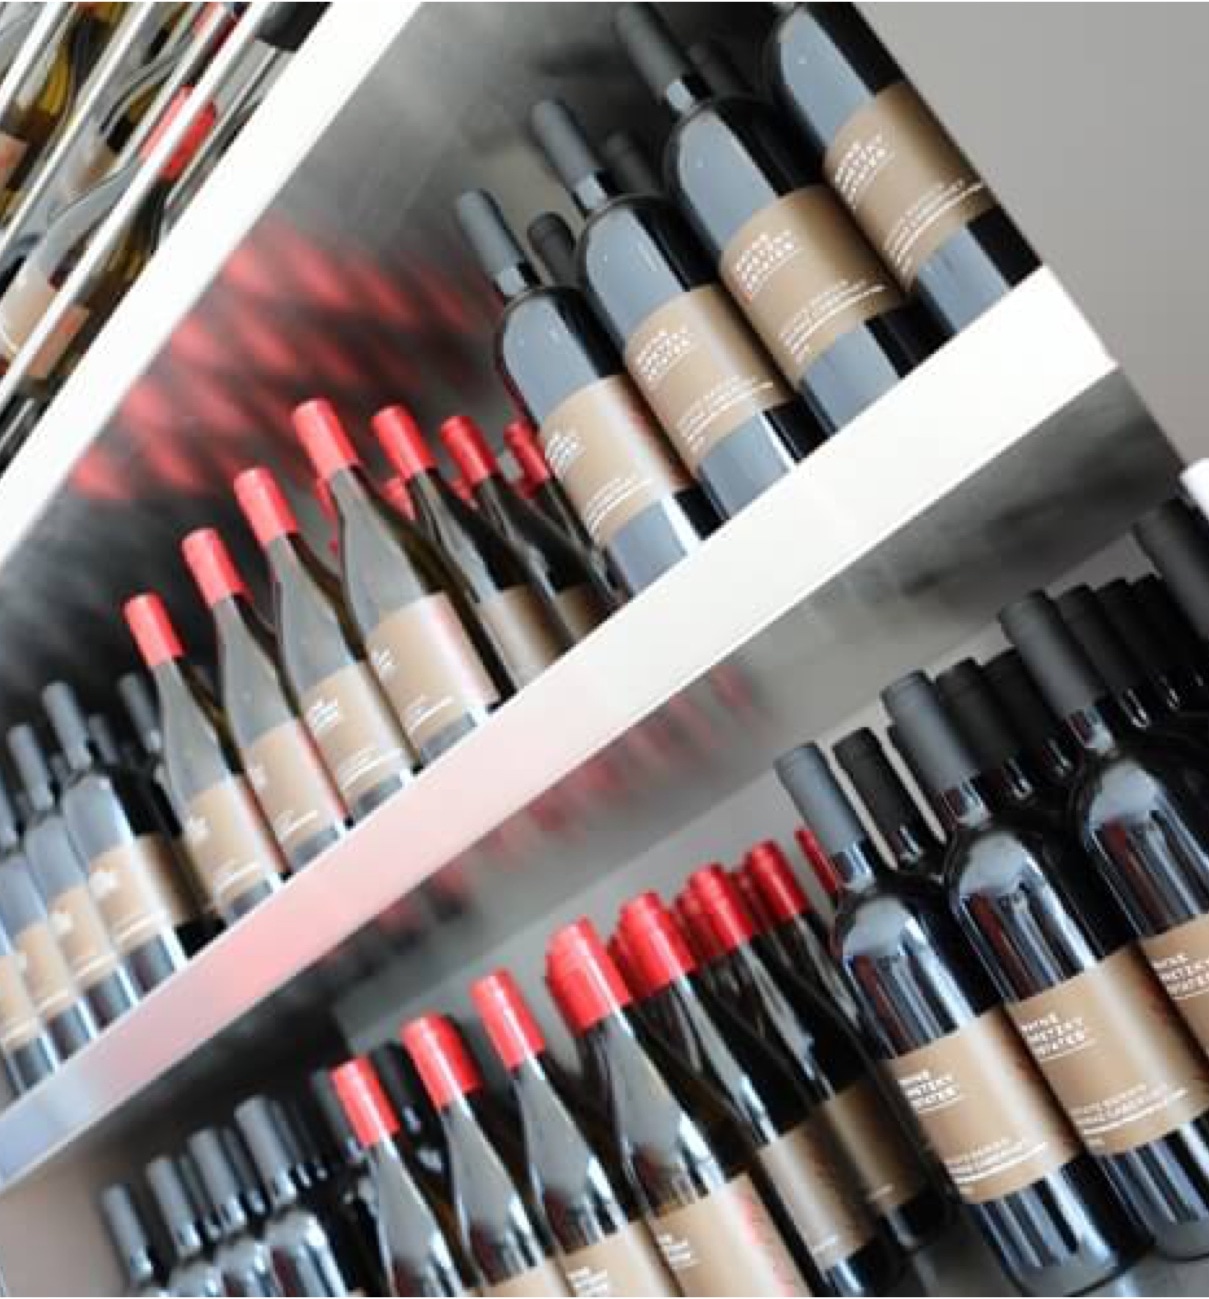 Wine shelf with many kind of wines.